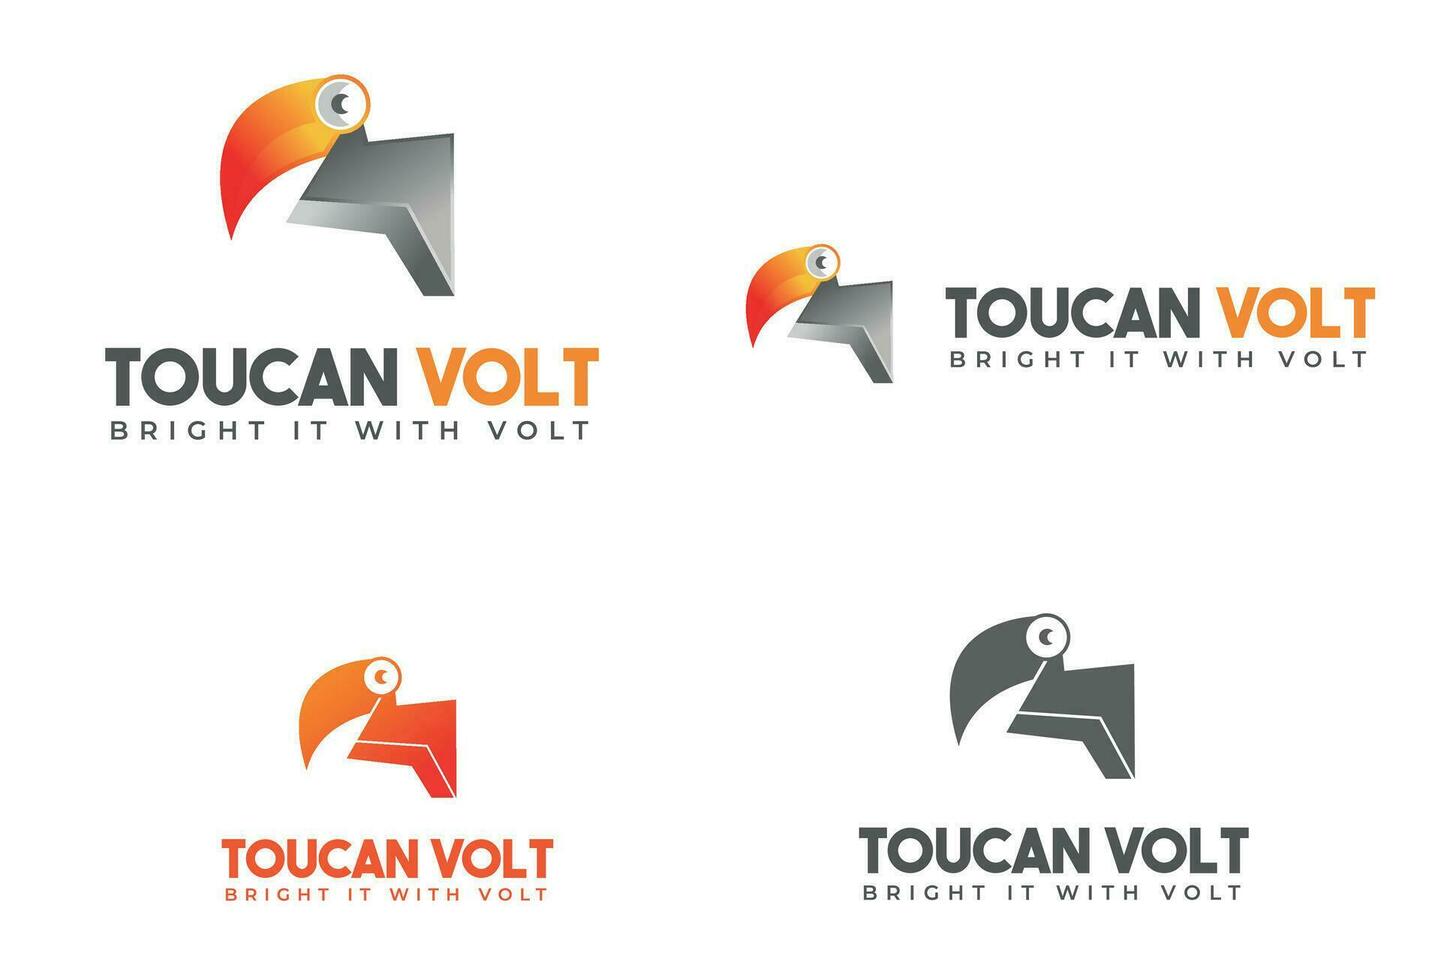 tormenta logo - pájaro tormenta vector logo - rápido pájaro logo, pájaro tecnología logo - moderno pájaro logo